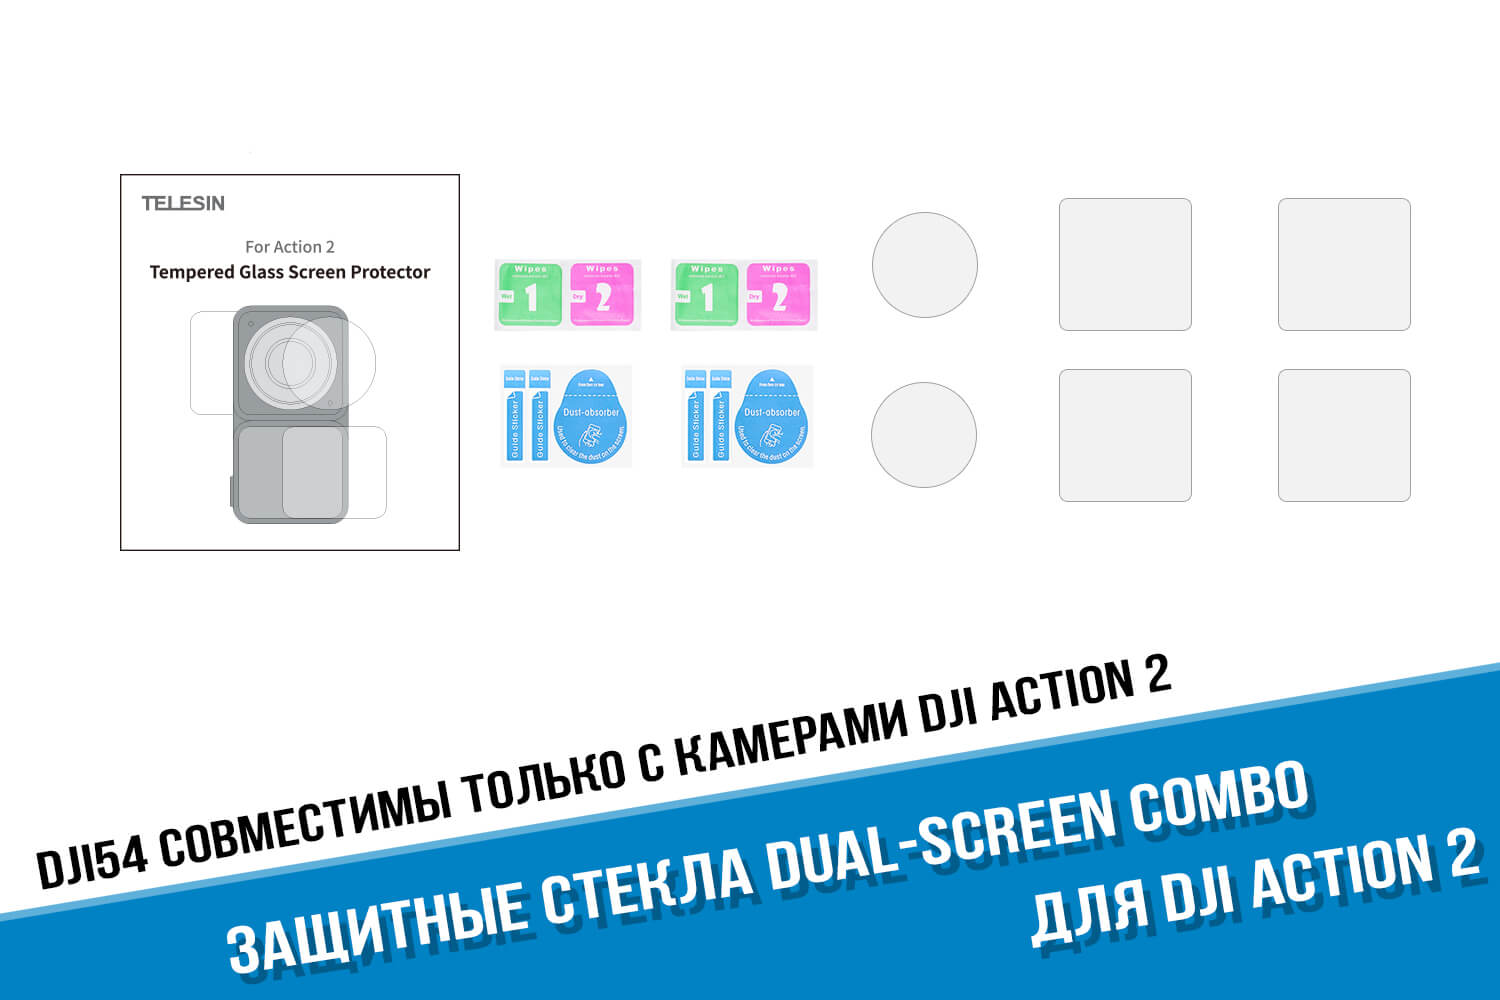 Стекла для экшн-камеры DJI Action 2 Dual-Screen Combo.